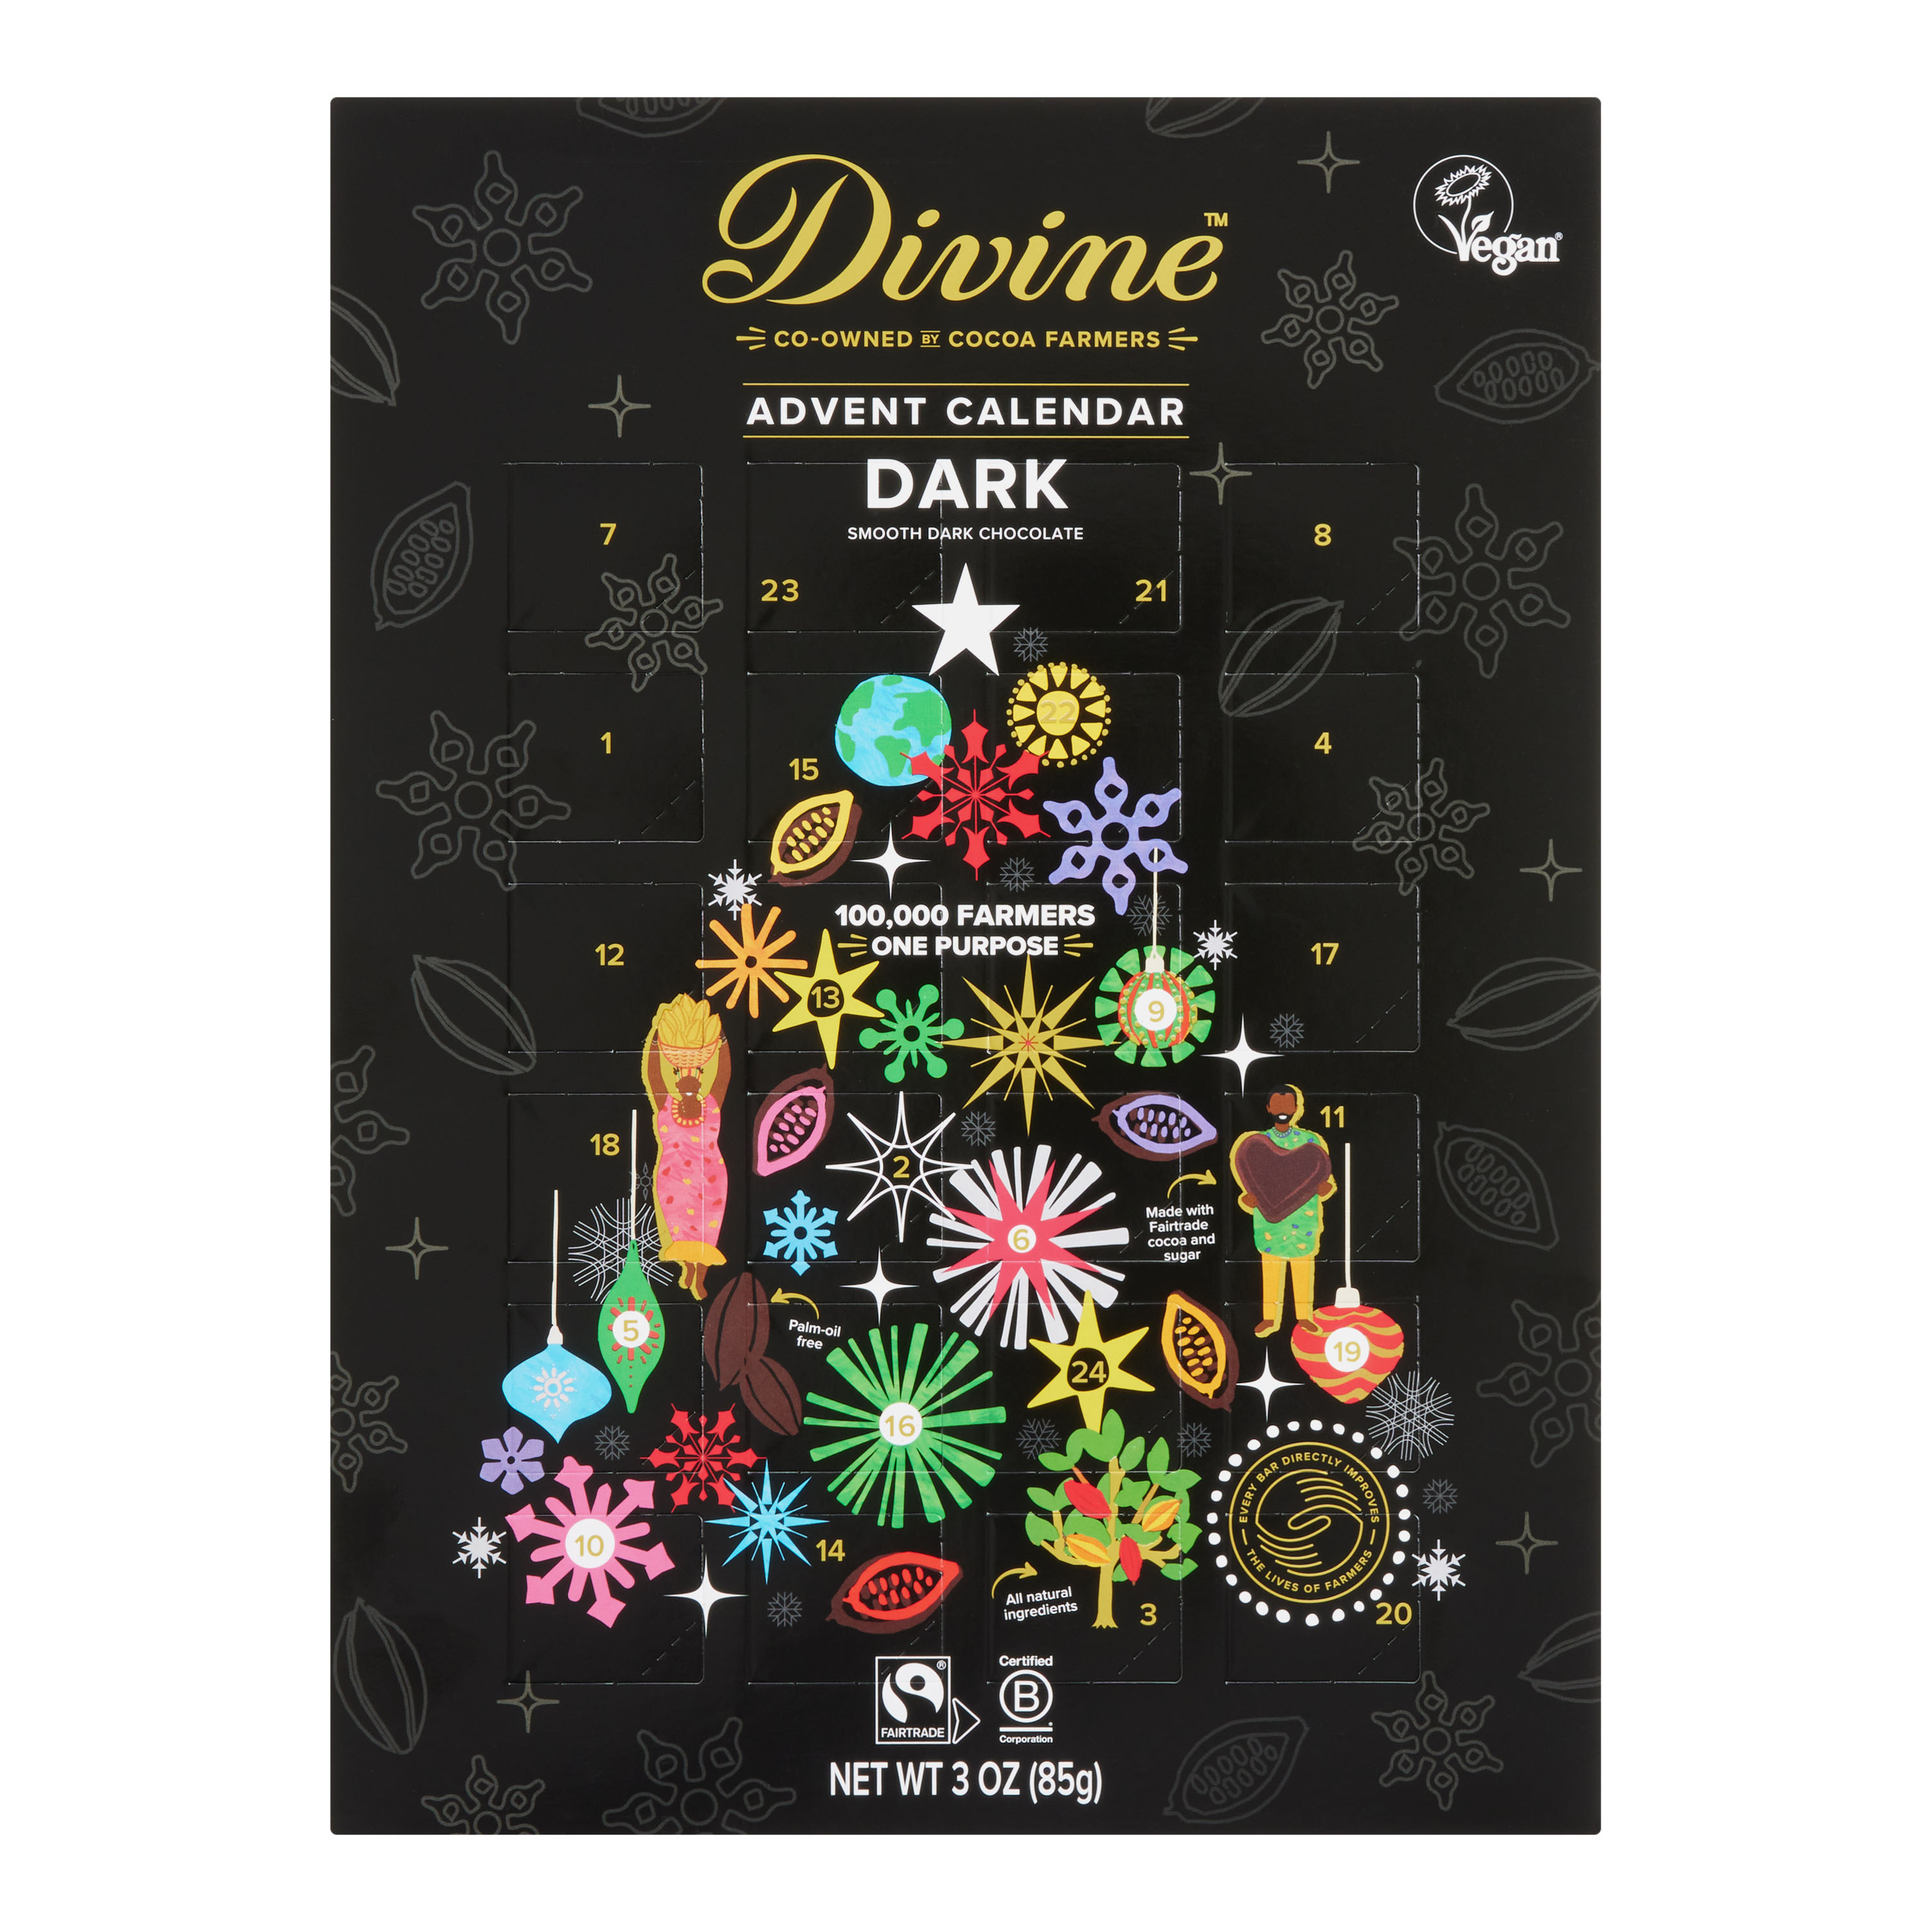 2021 Milka Advent Calendar: 24 Festive Chocolate Figurines